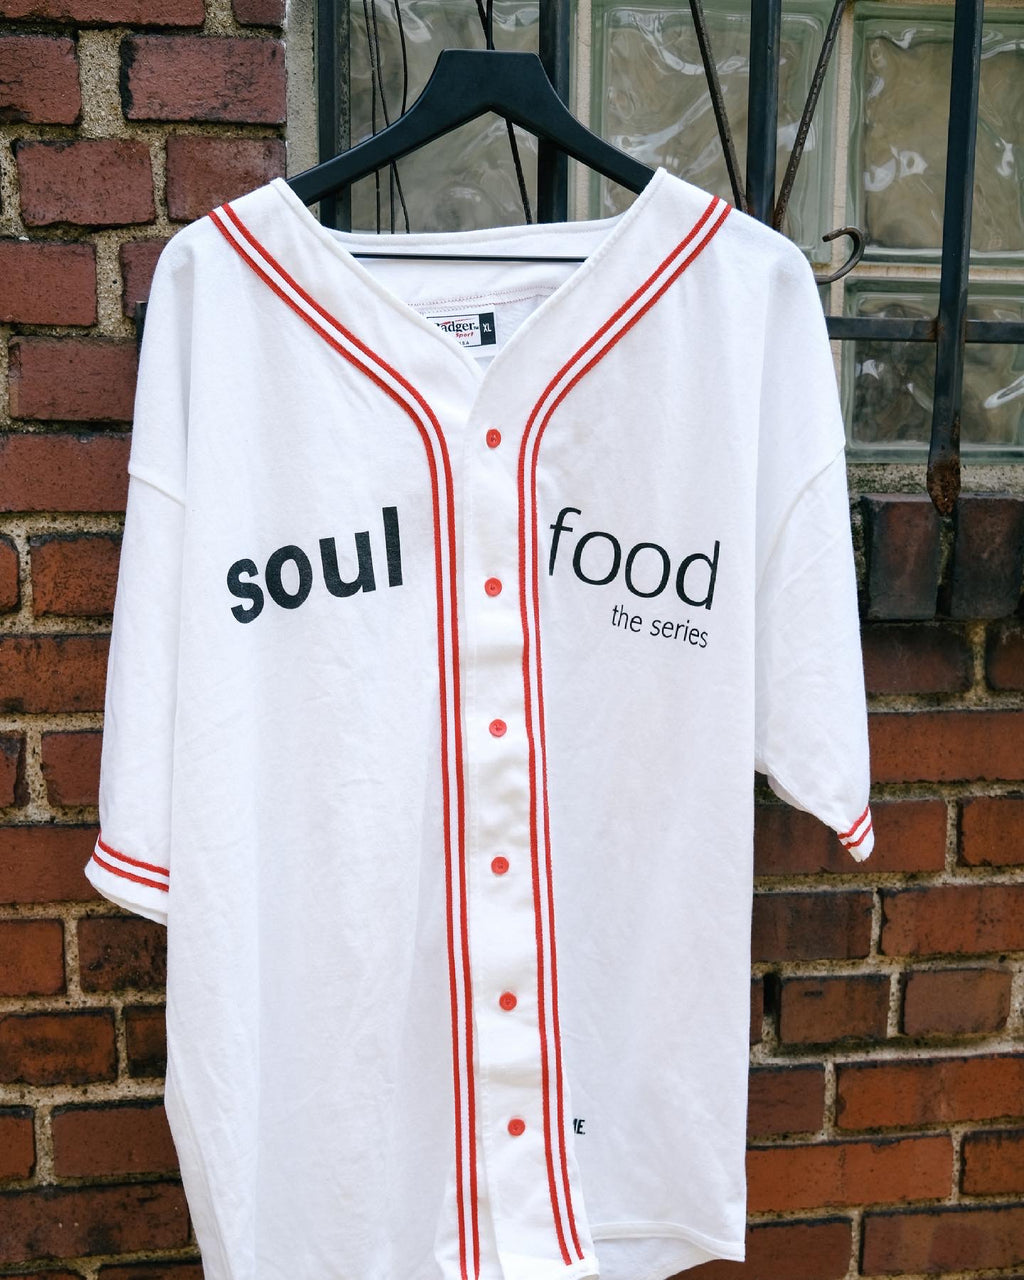 Soul Food Promo Jersey